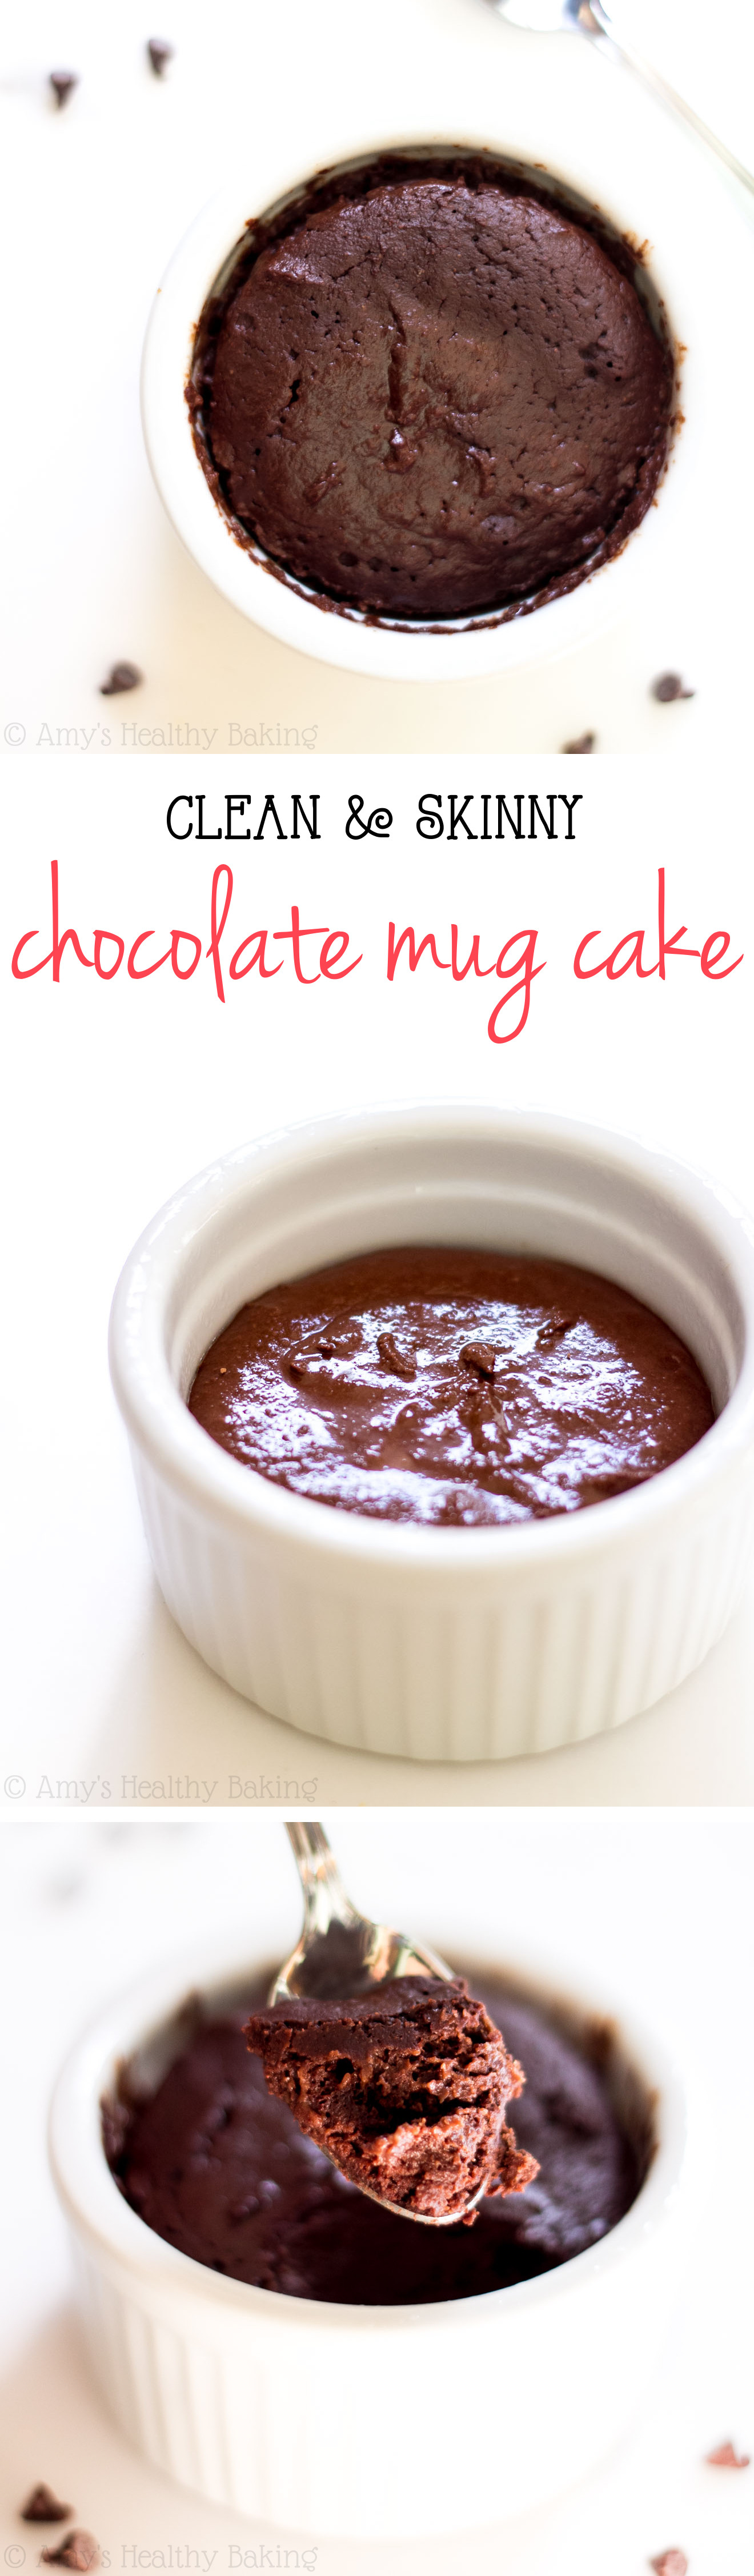 Easy Chocolate Mug Cake
 Single Serving Clean Chocolate Mug Cake Recipe Video